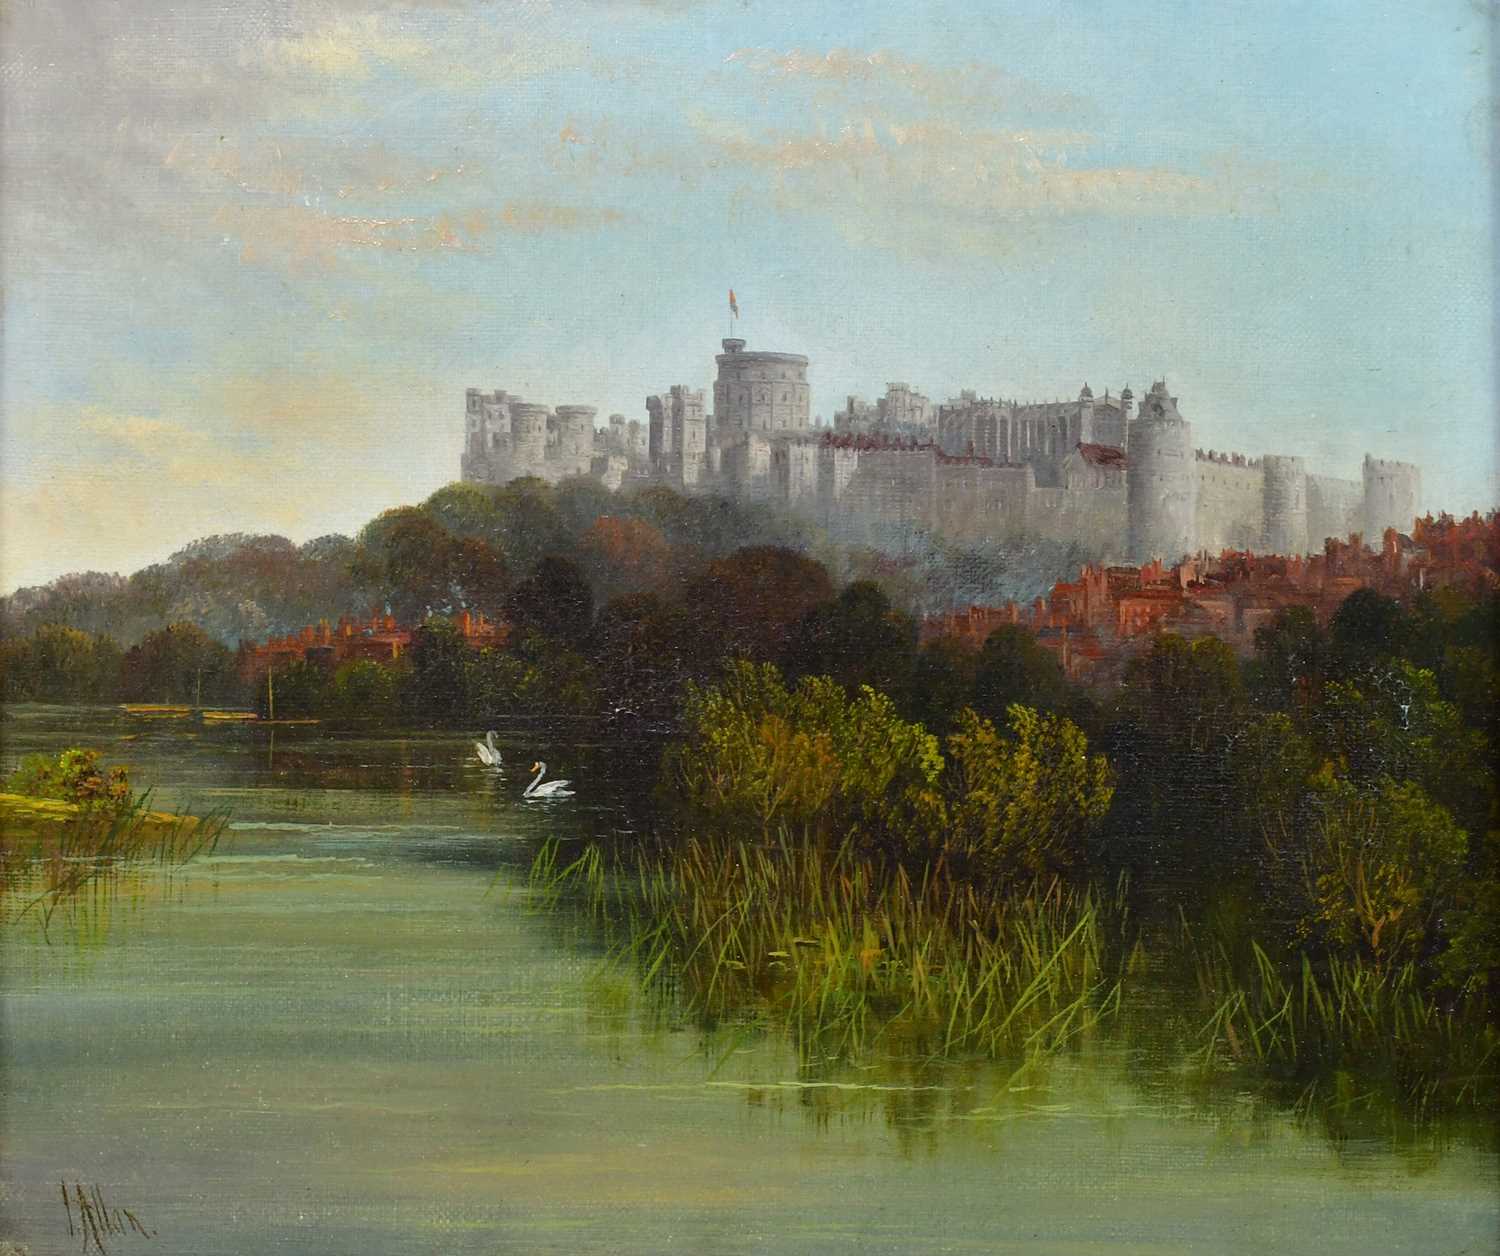 I ALLAN; oil on canvas, castle next to a river, signed lower left, 34 x 29cm, framed. - Image 2 of 4